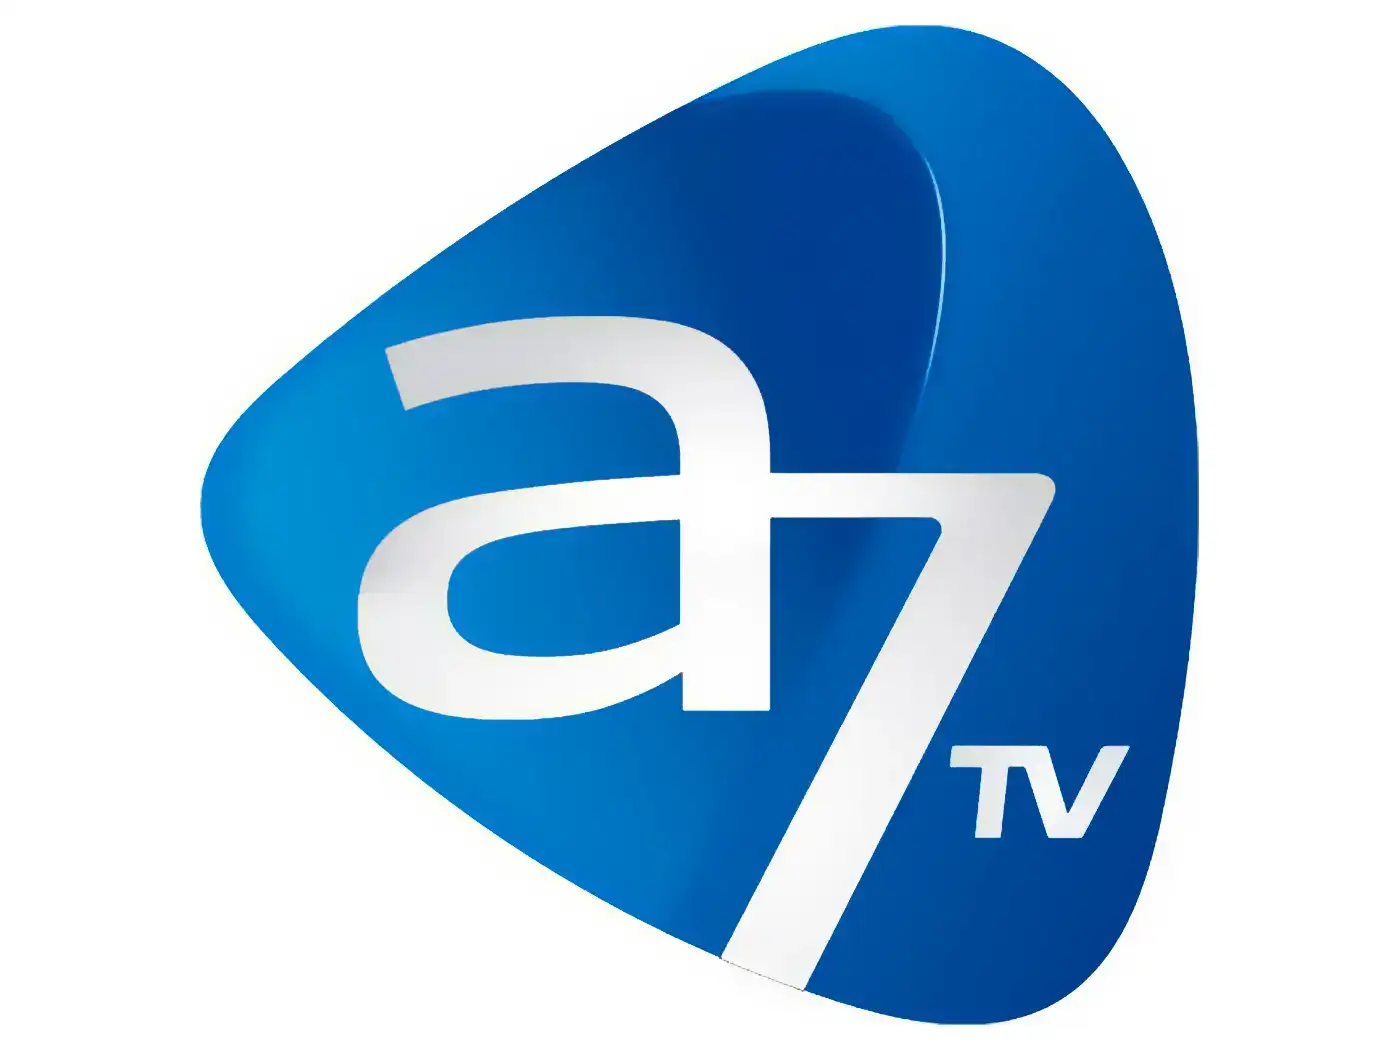 S 7 tv. 7 ТВ Телеканал. 7тв. Румынские Телеканалы. ТВ канал семерка.